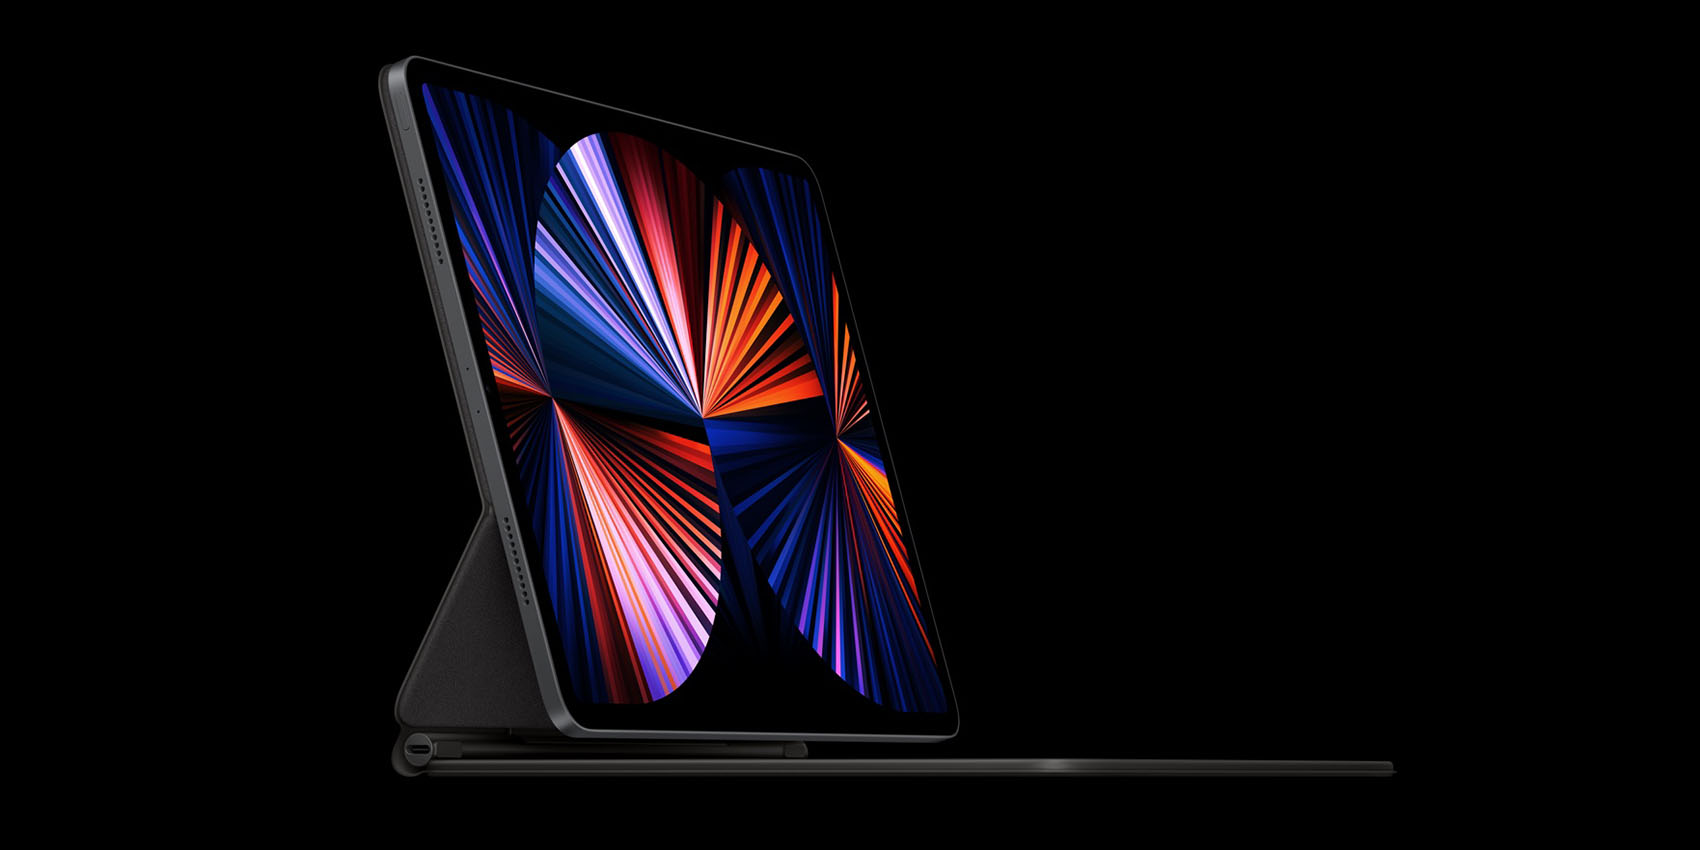 Best Cyber Monday 2021 Apple Deals: M1 Pro MacBooks 300 off, Apple Watch Series 6 100 off, more